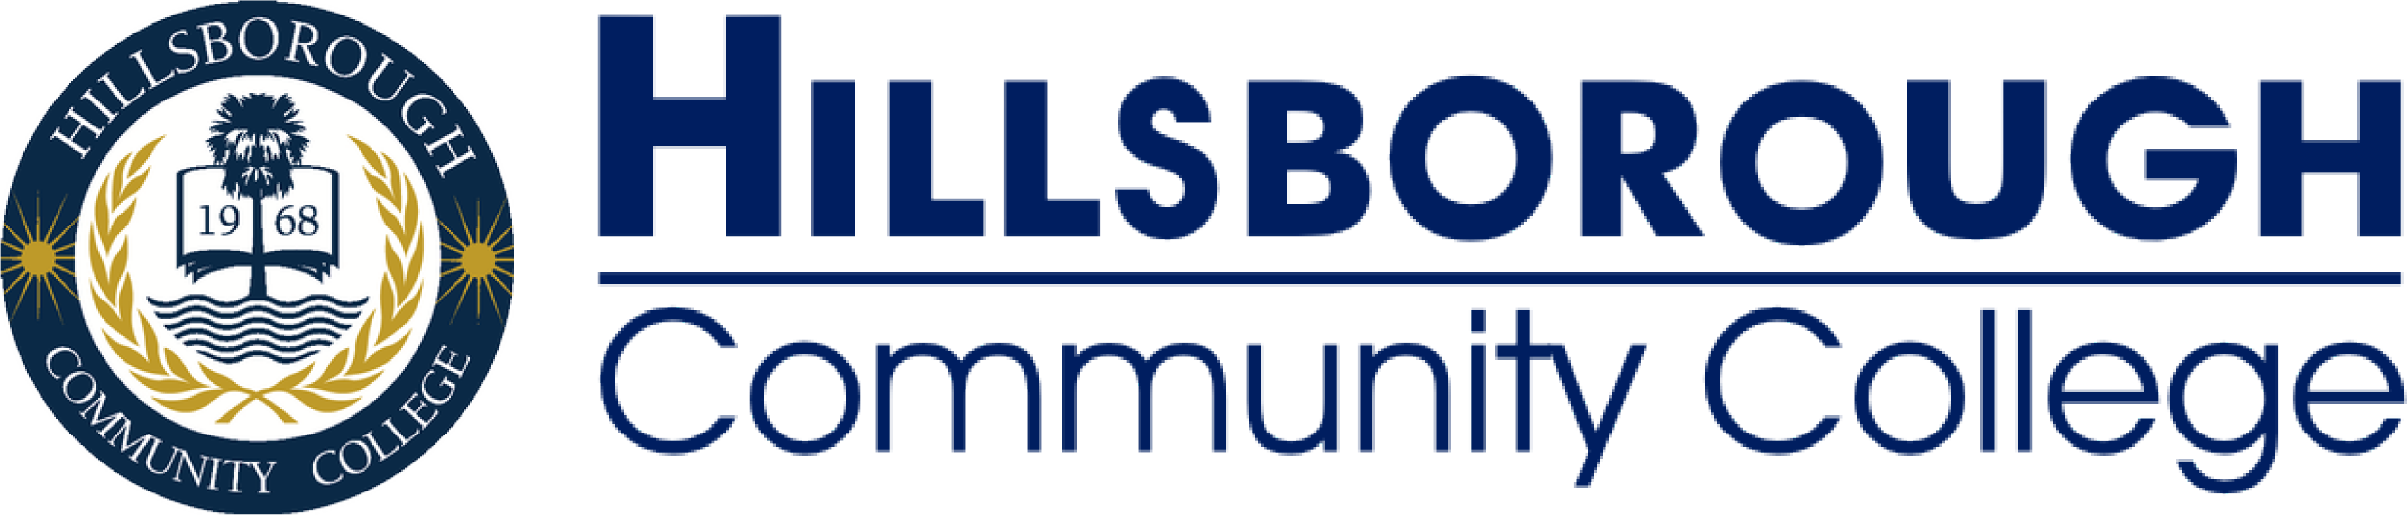 logo for hillsborough Community College